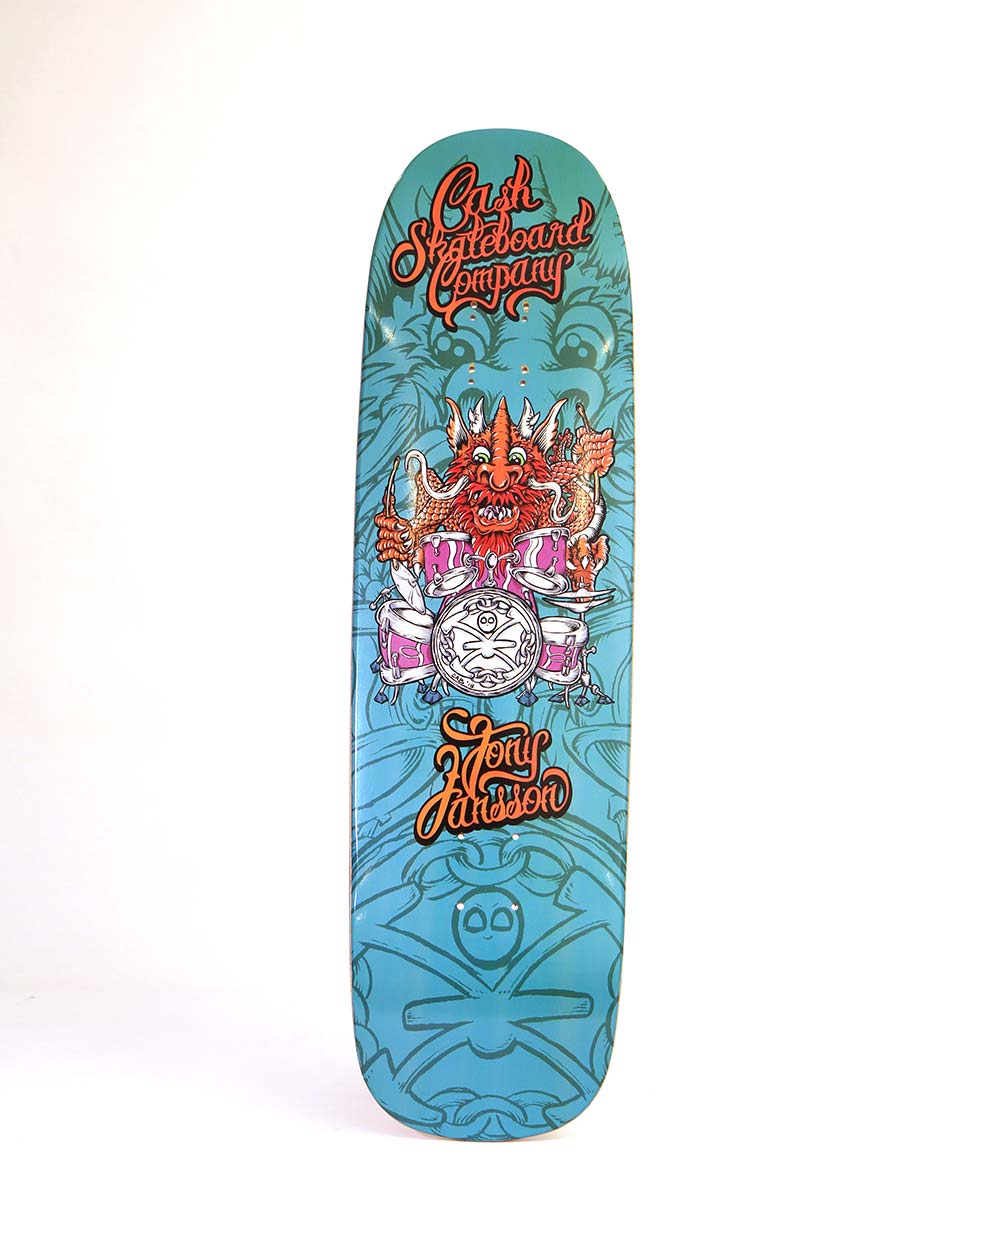 Cash Skateboards - Tony Jansson 8.75